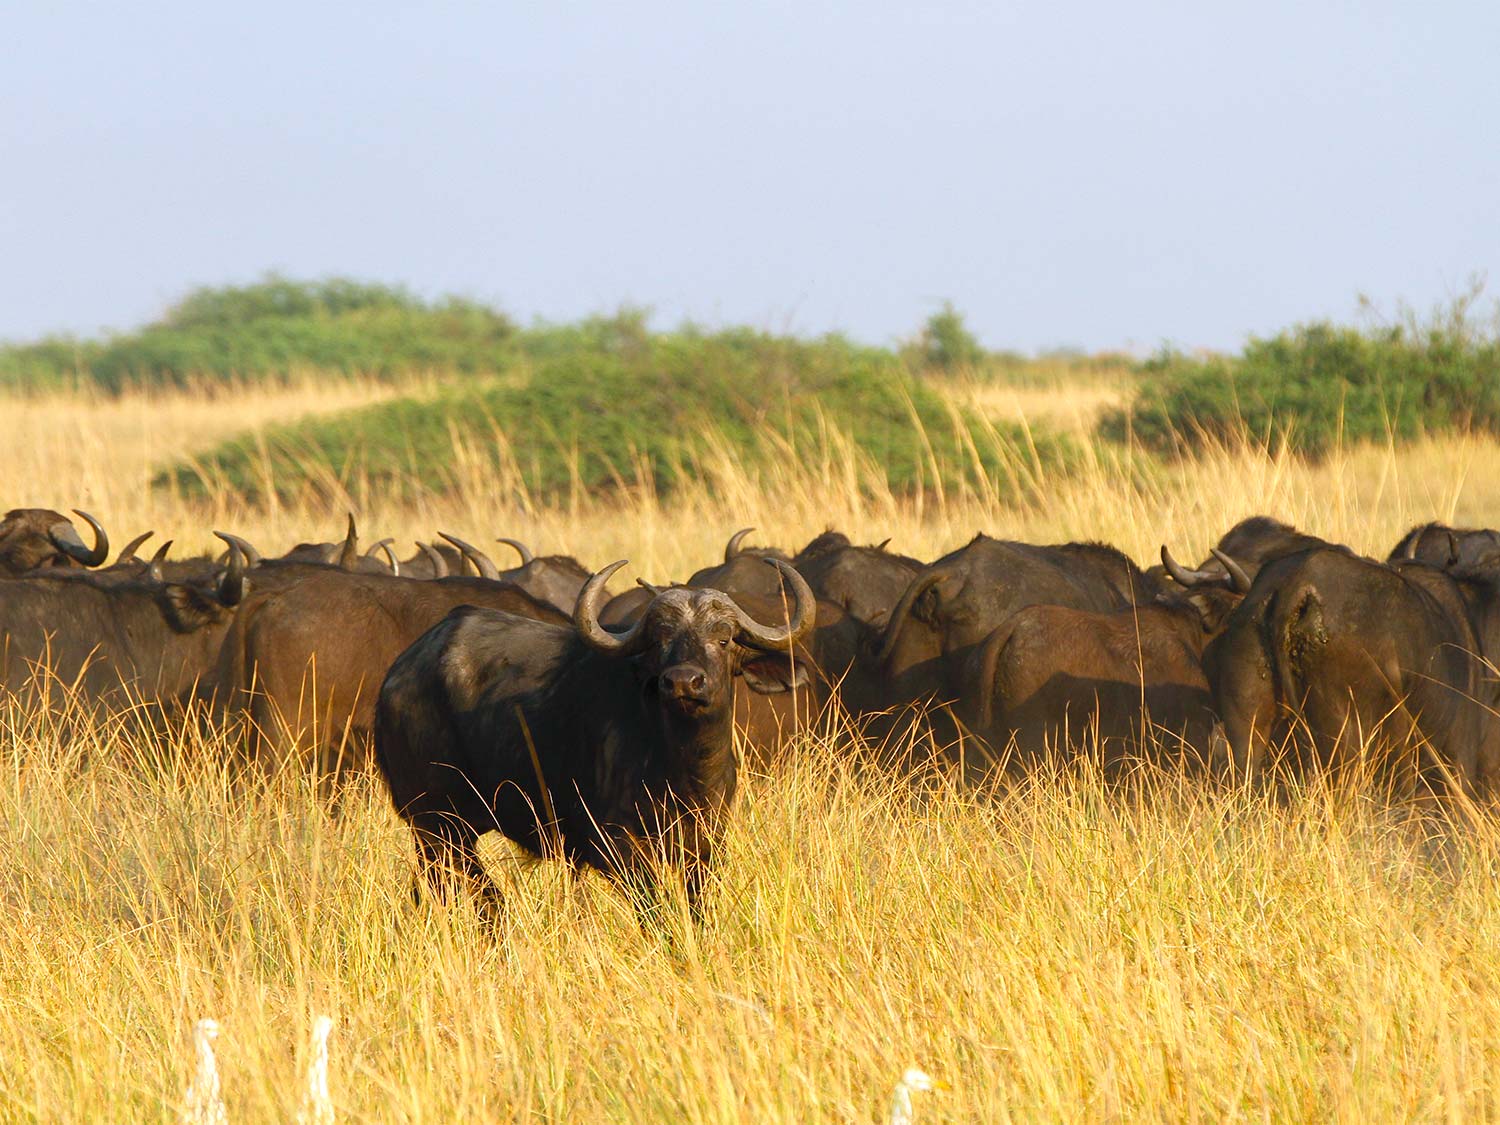 a wild buffalo in an African field.